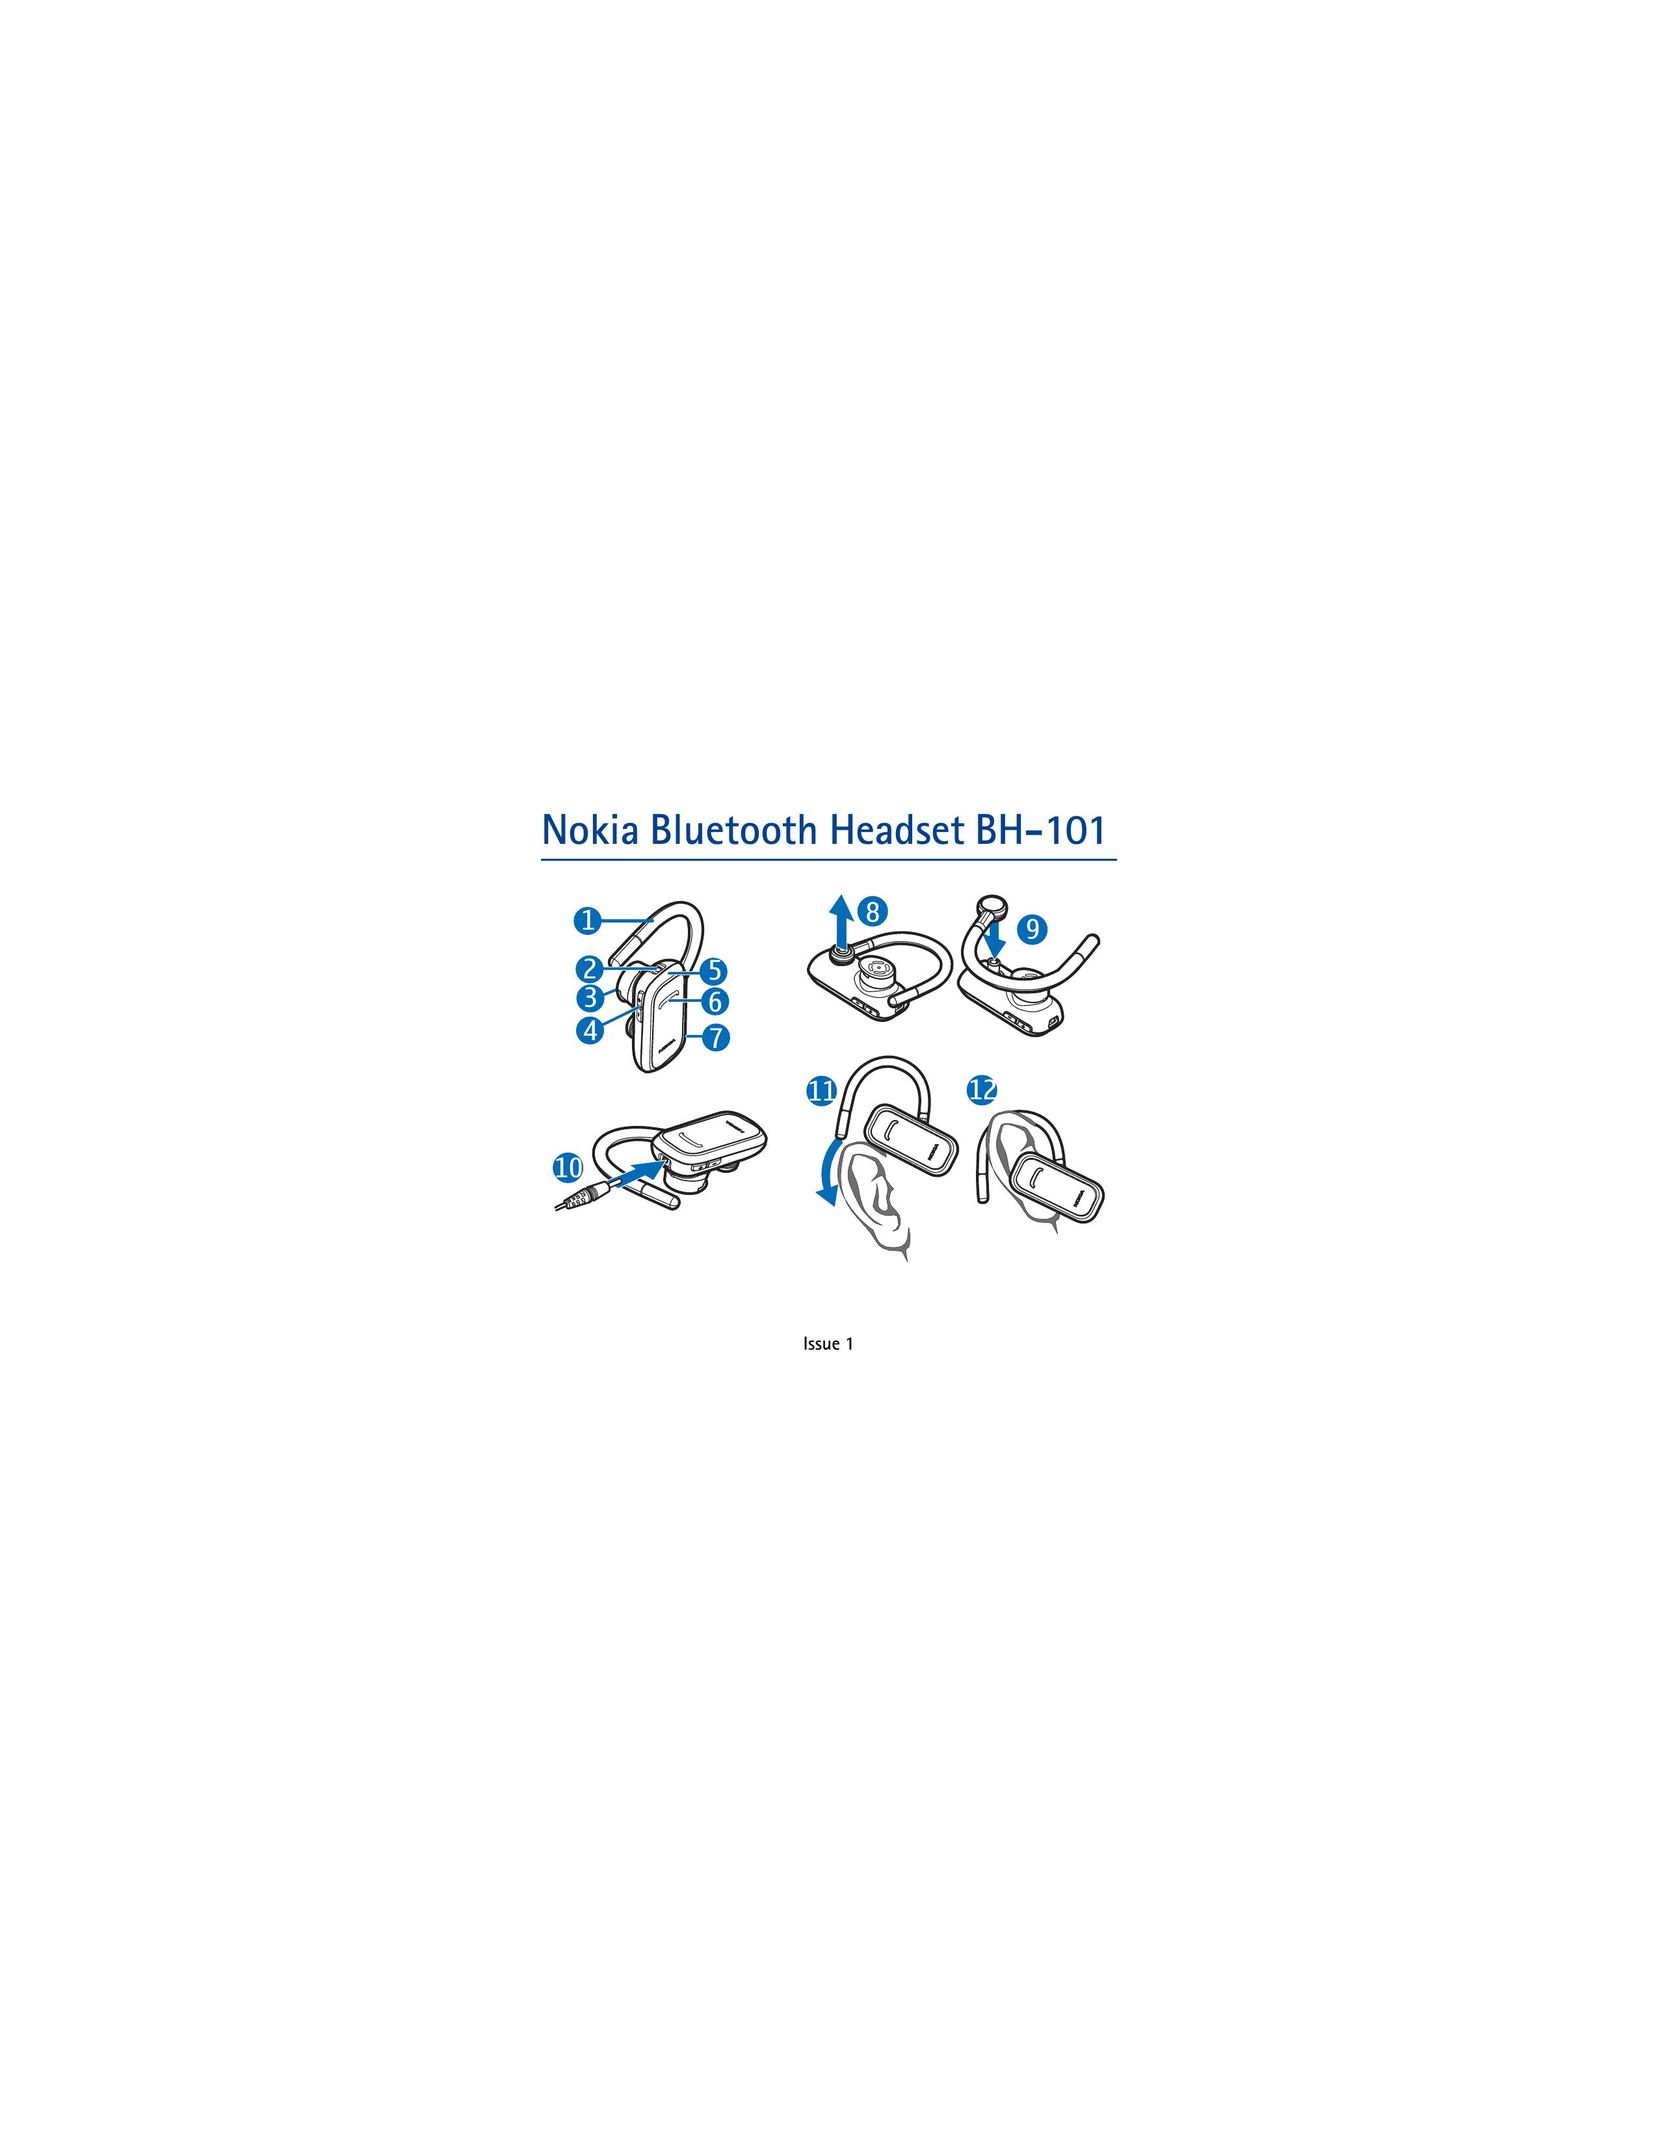 Nokia BH-101 Bluetooth Headset User Manual